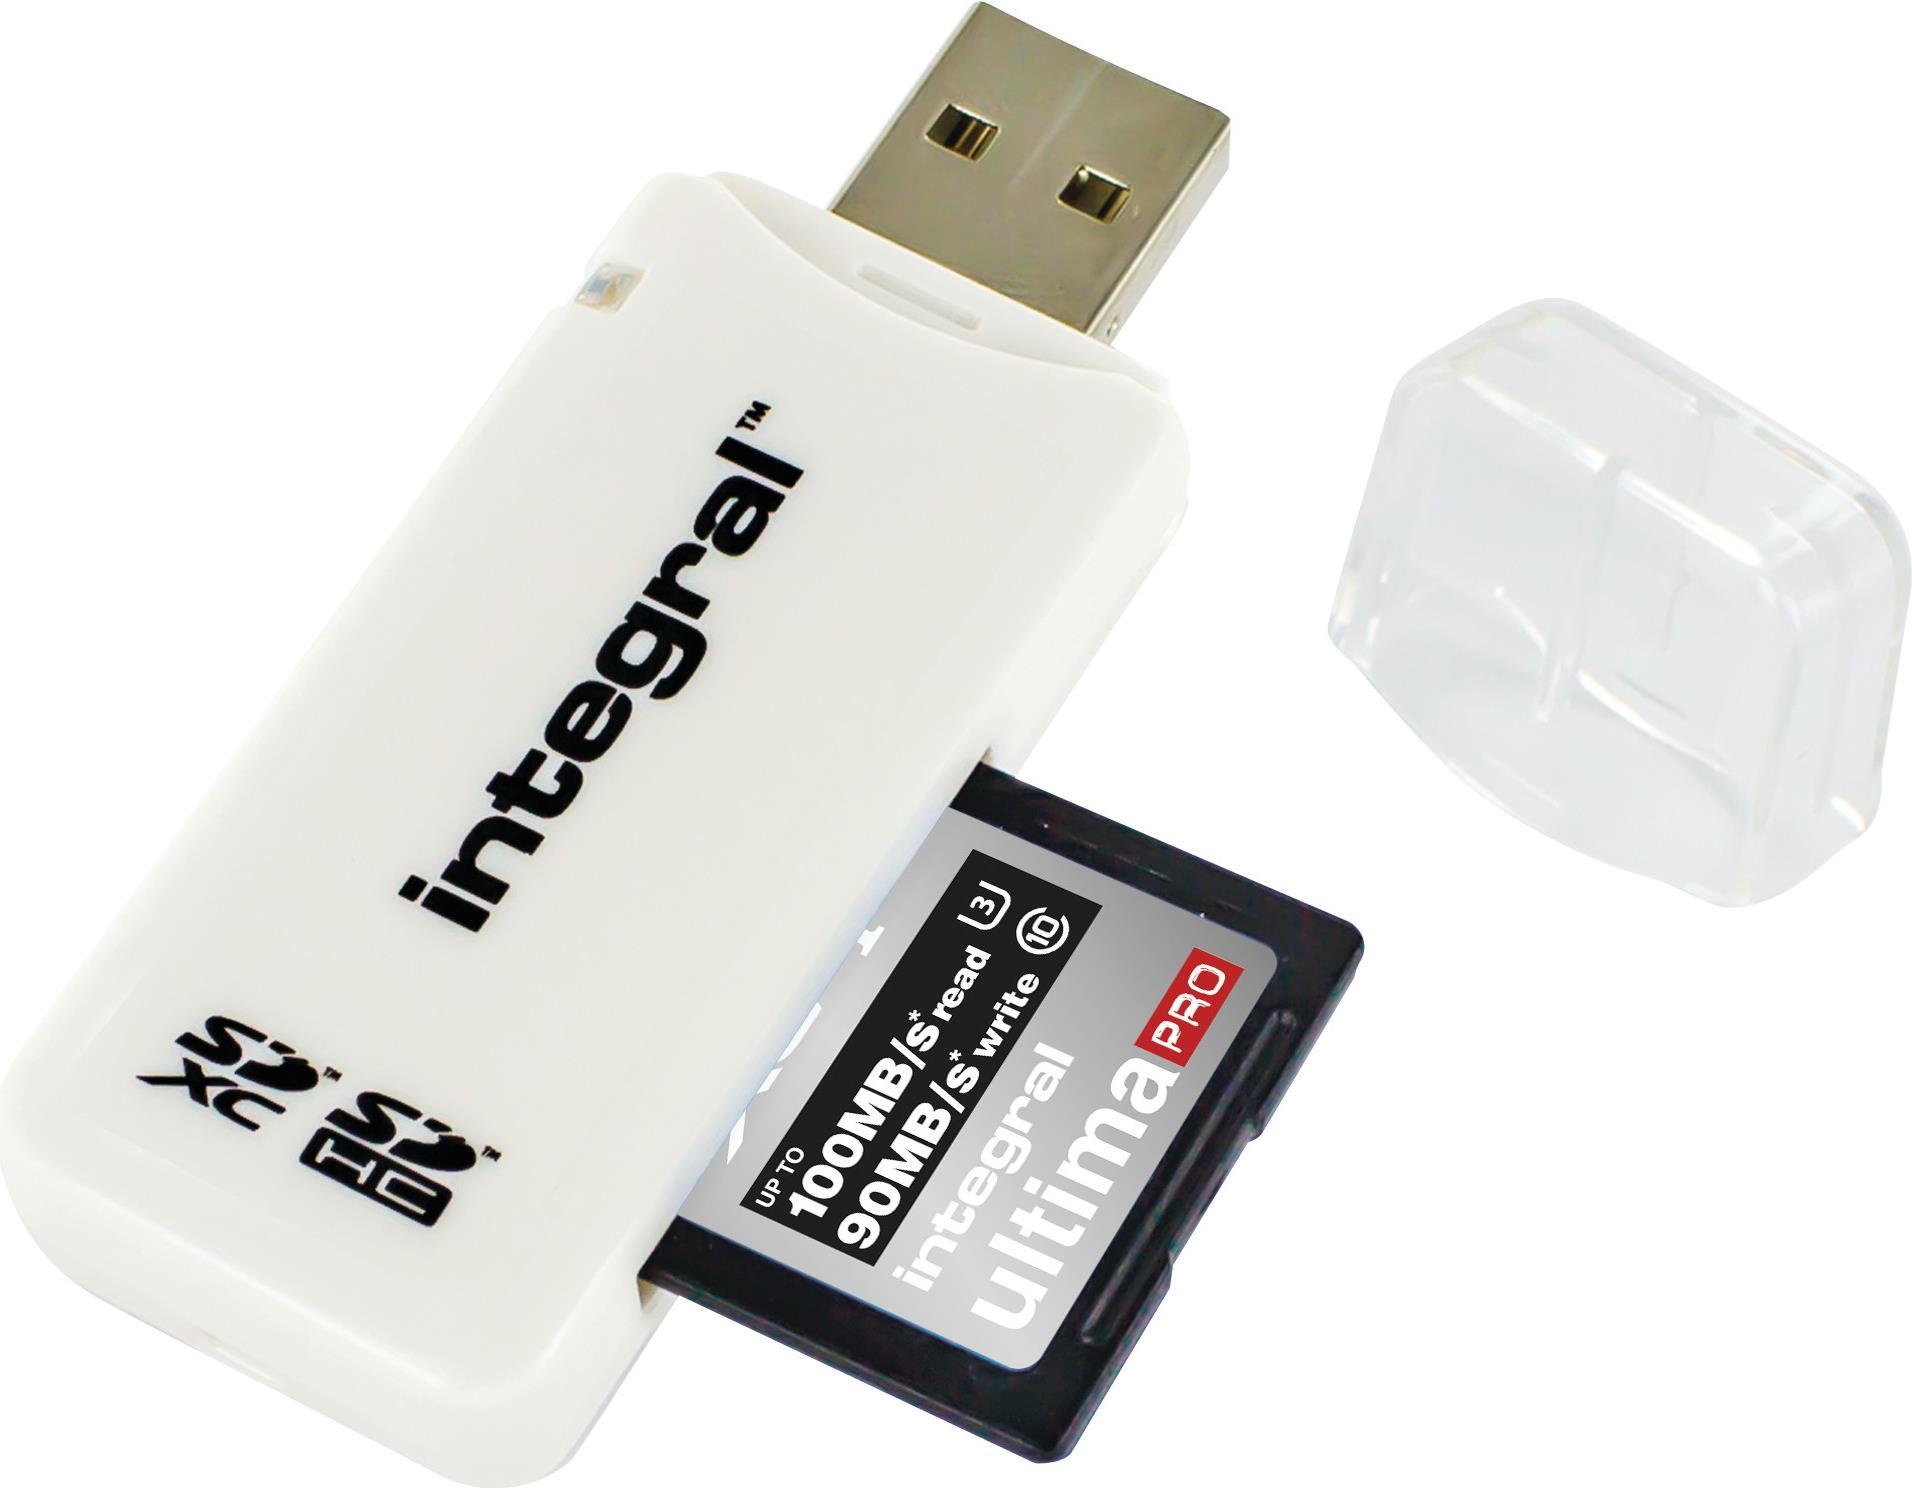 Integral USB2.0 CARDREADER SINGLE SLOT SD ETAIL (INCRSDNRP)